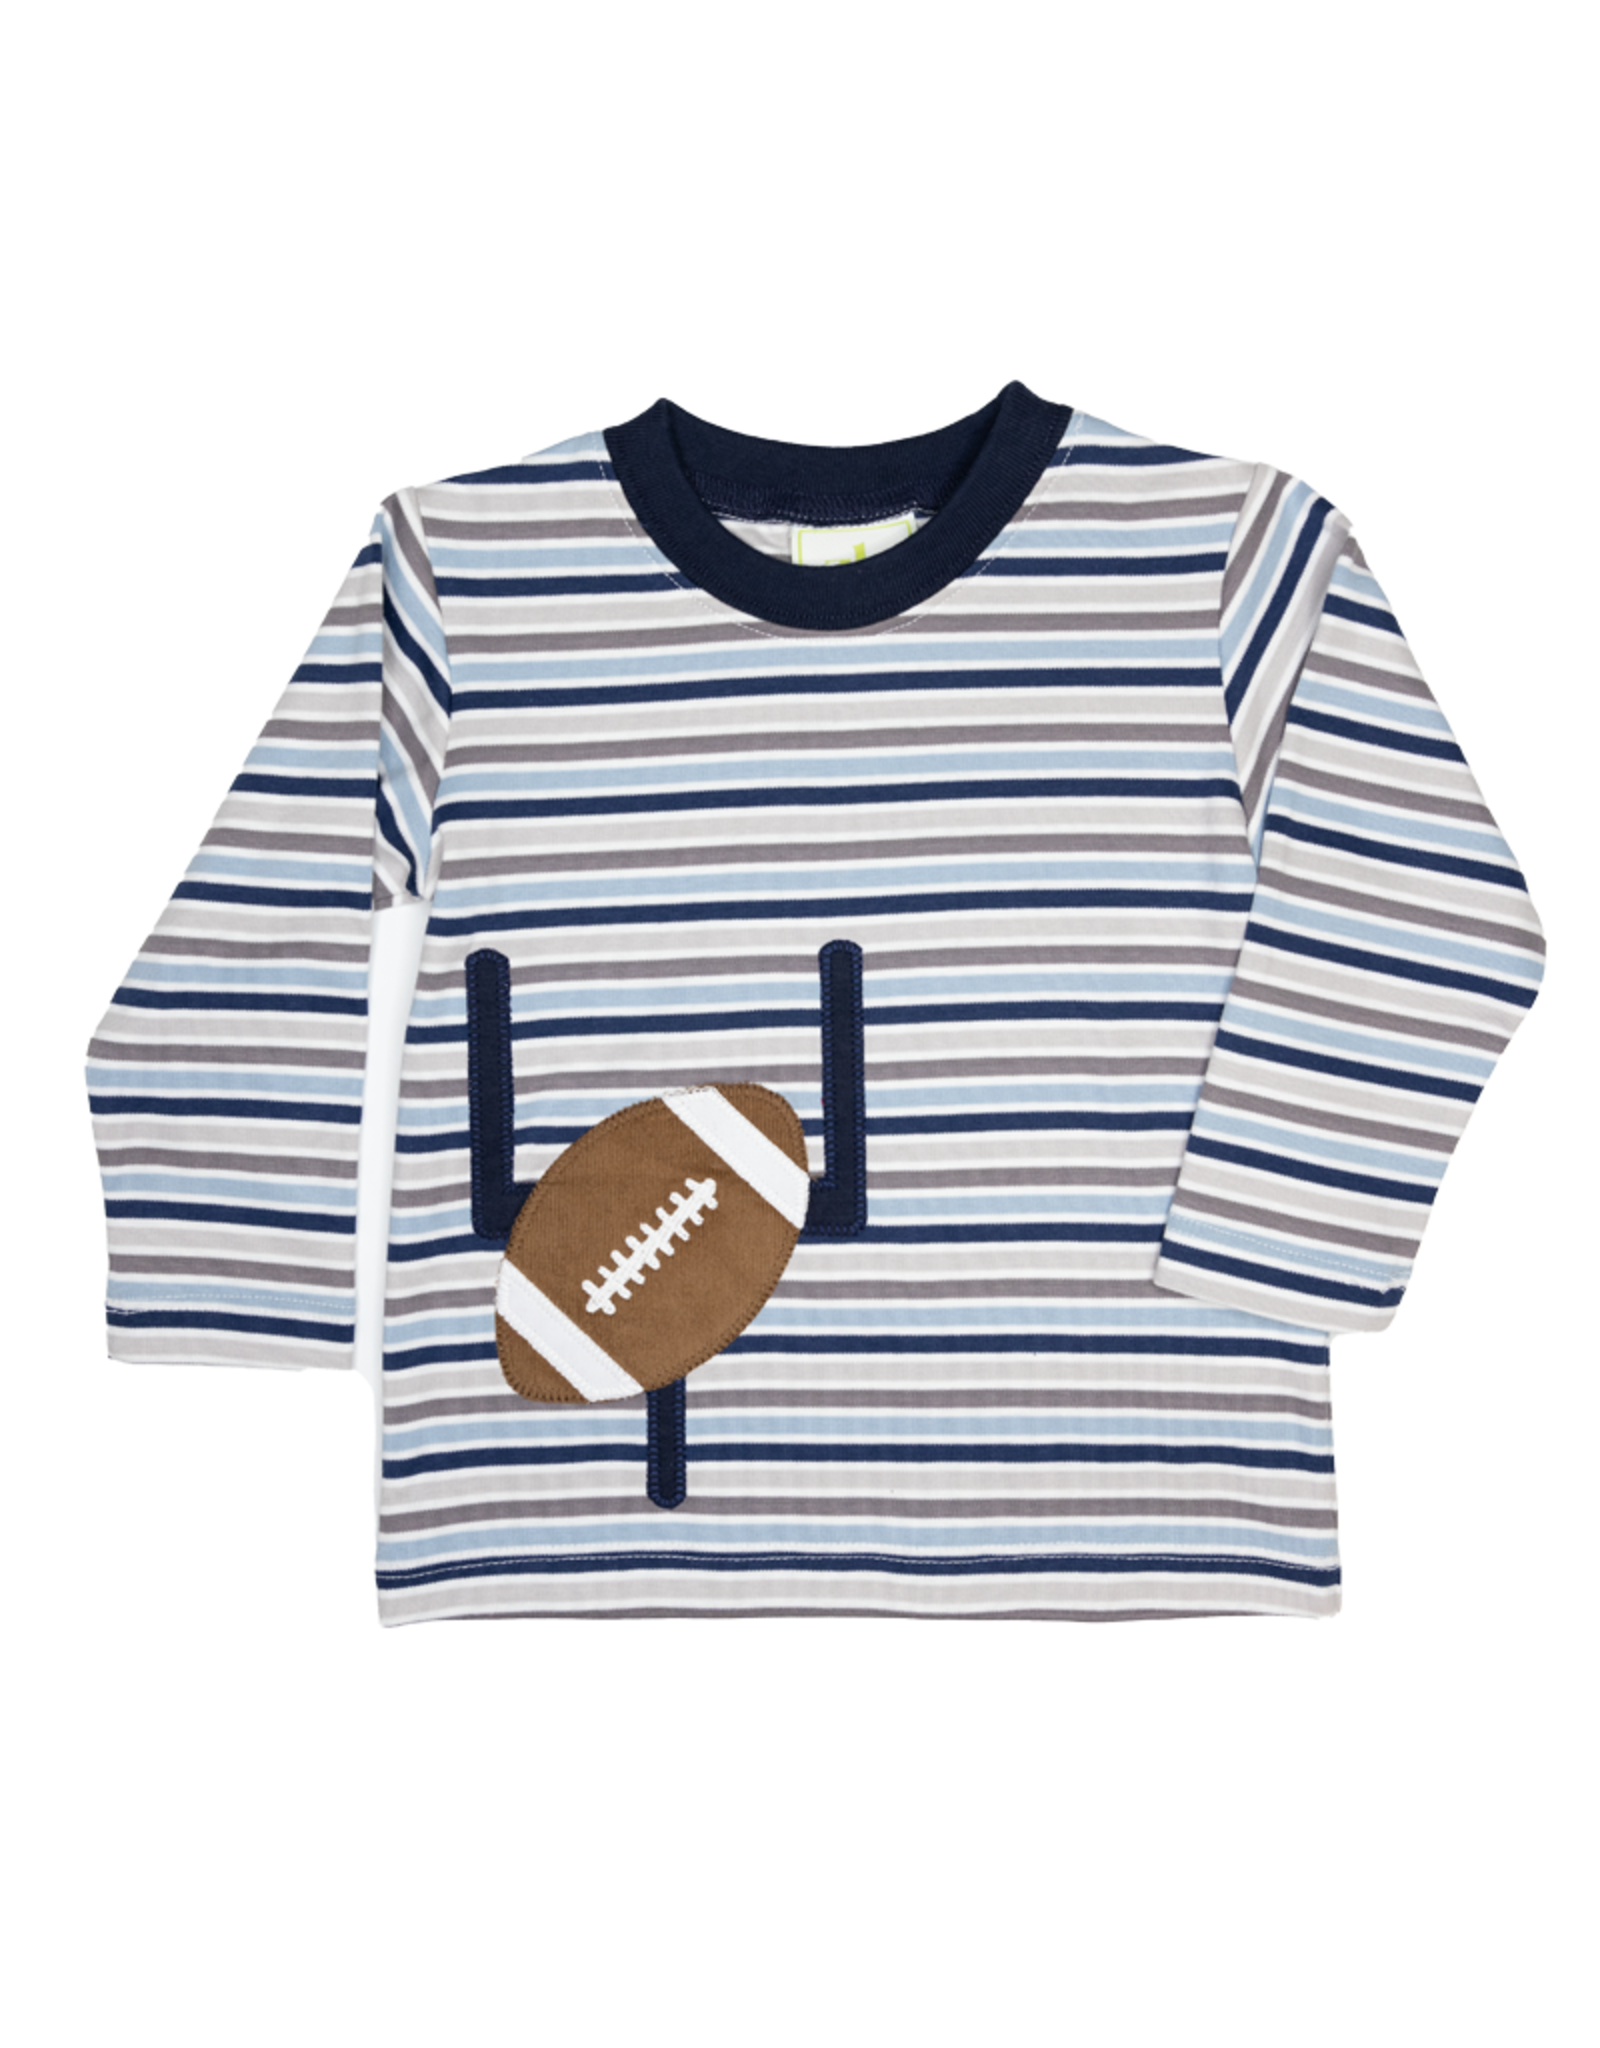 Zuccini ZAB23 Stripe Football Shirt